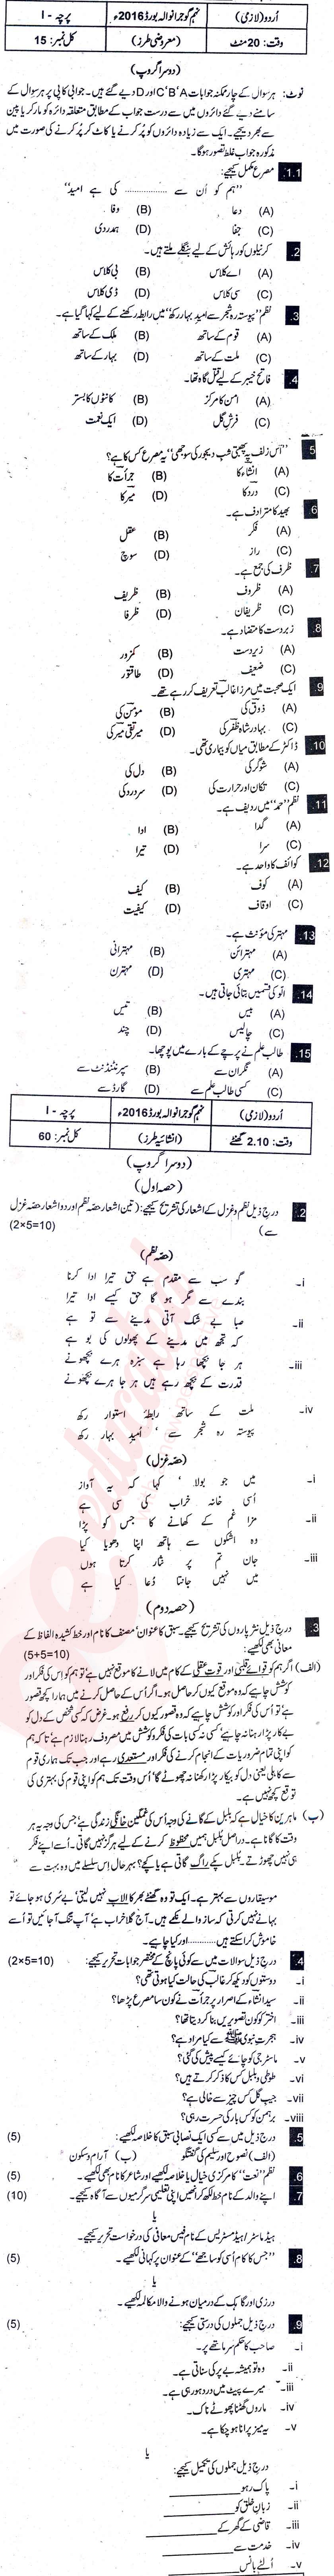 Urdu 9th class Past Paper Group 2 BISE Gujranwala 2016